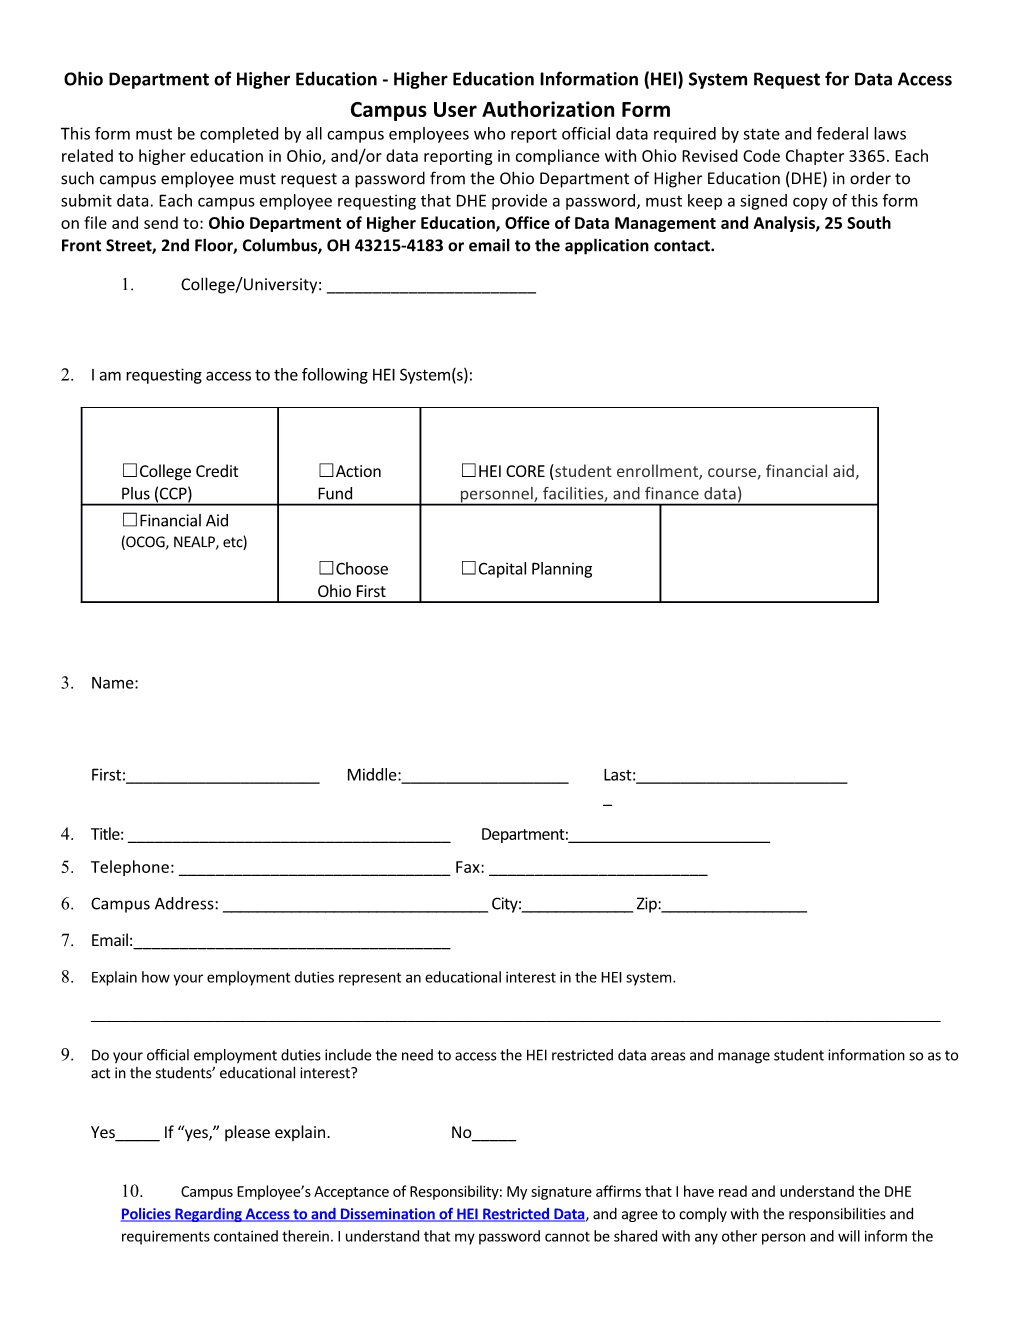 Campus User Authorization Form